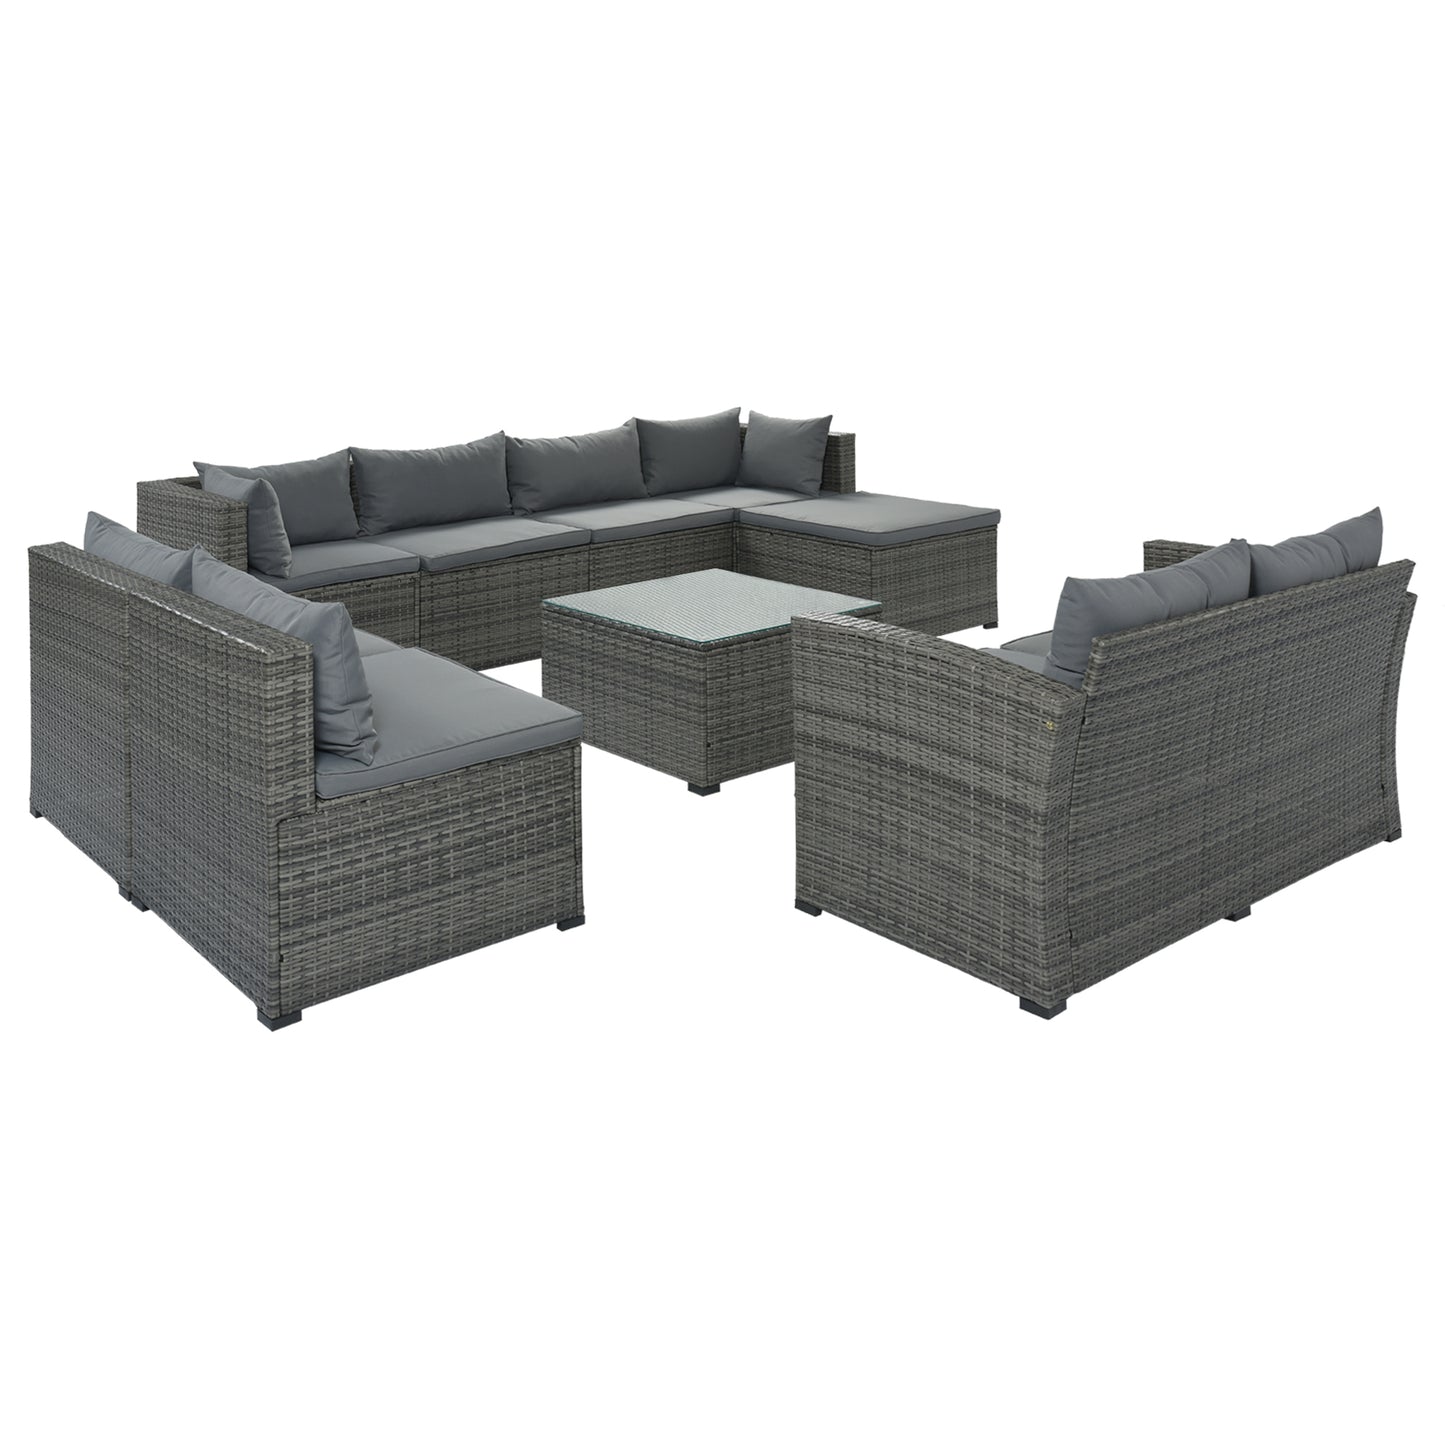 9-piece Outdoor Patio Large Wicker Sofa Set, Rattan Sofa set for Garden, Backyard, Porch and Poolside, Gray wicker, Gray Cushion